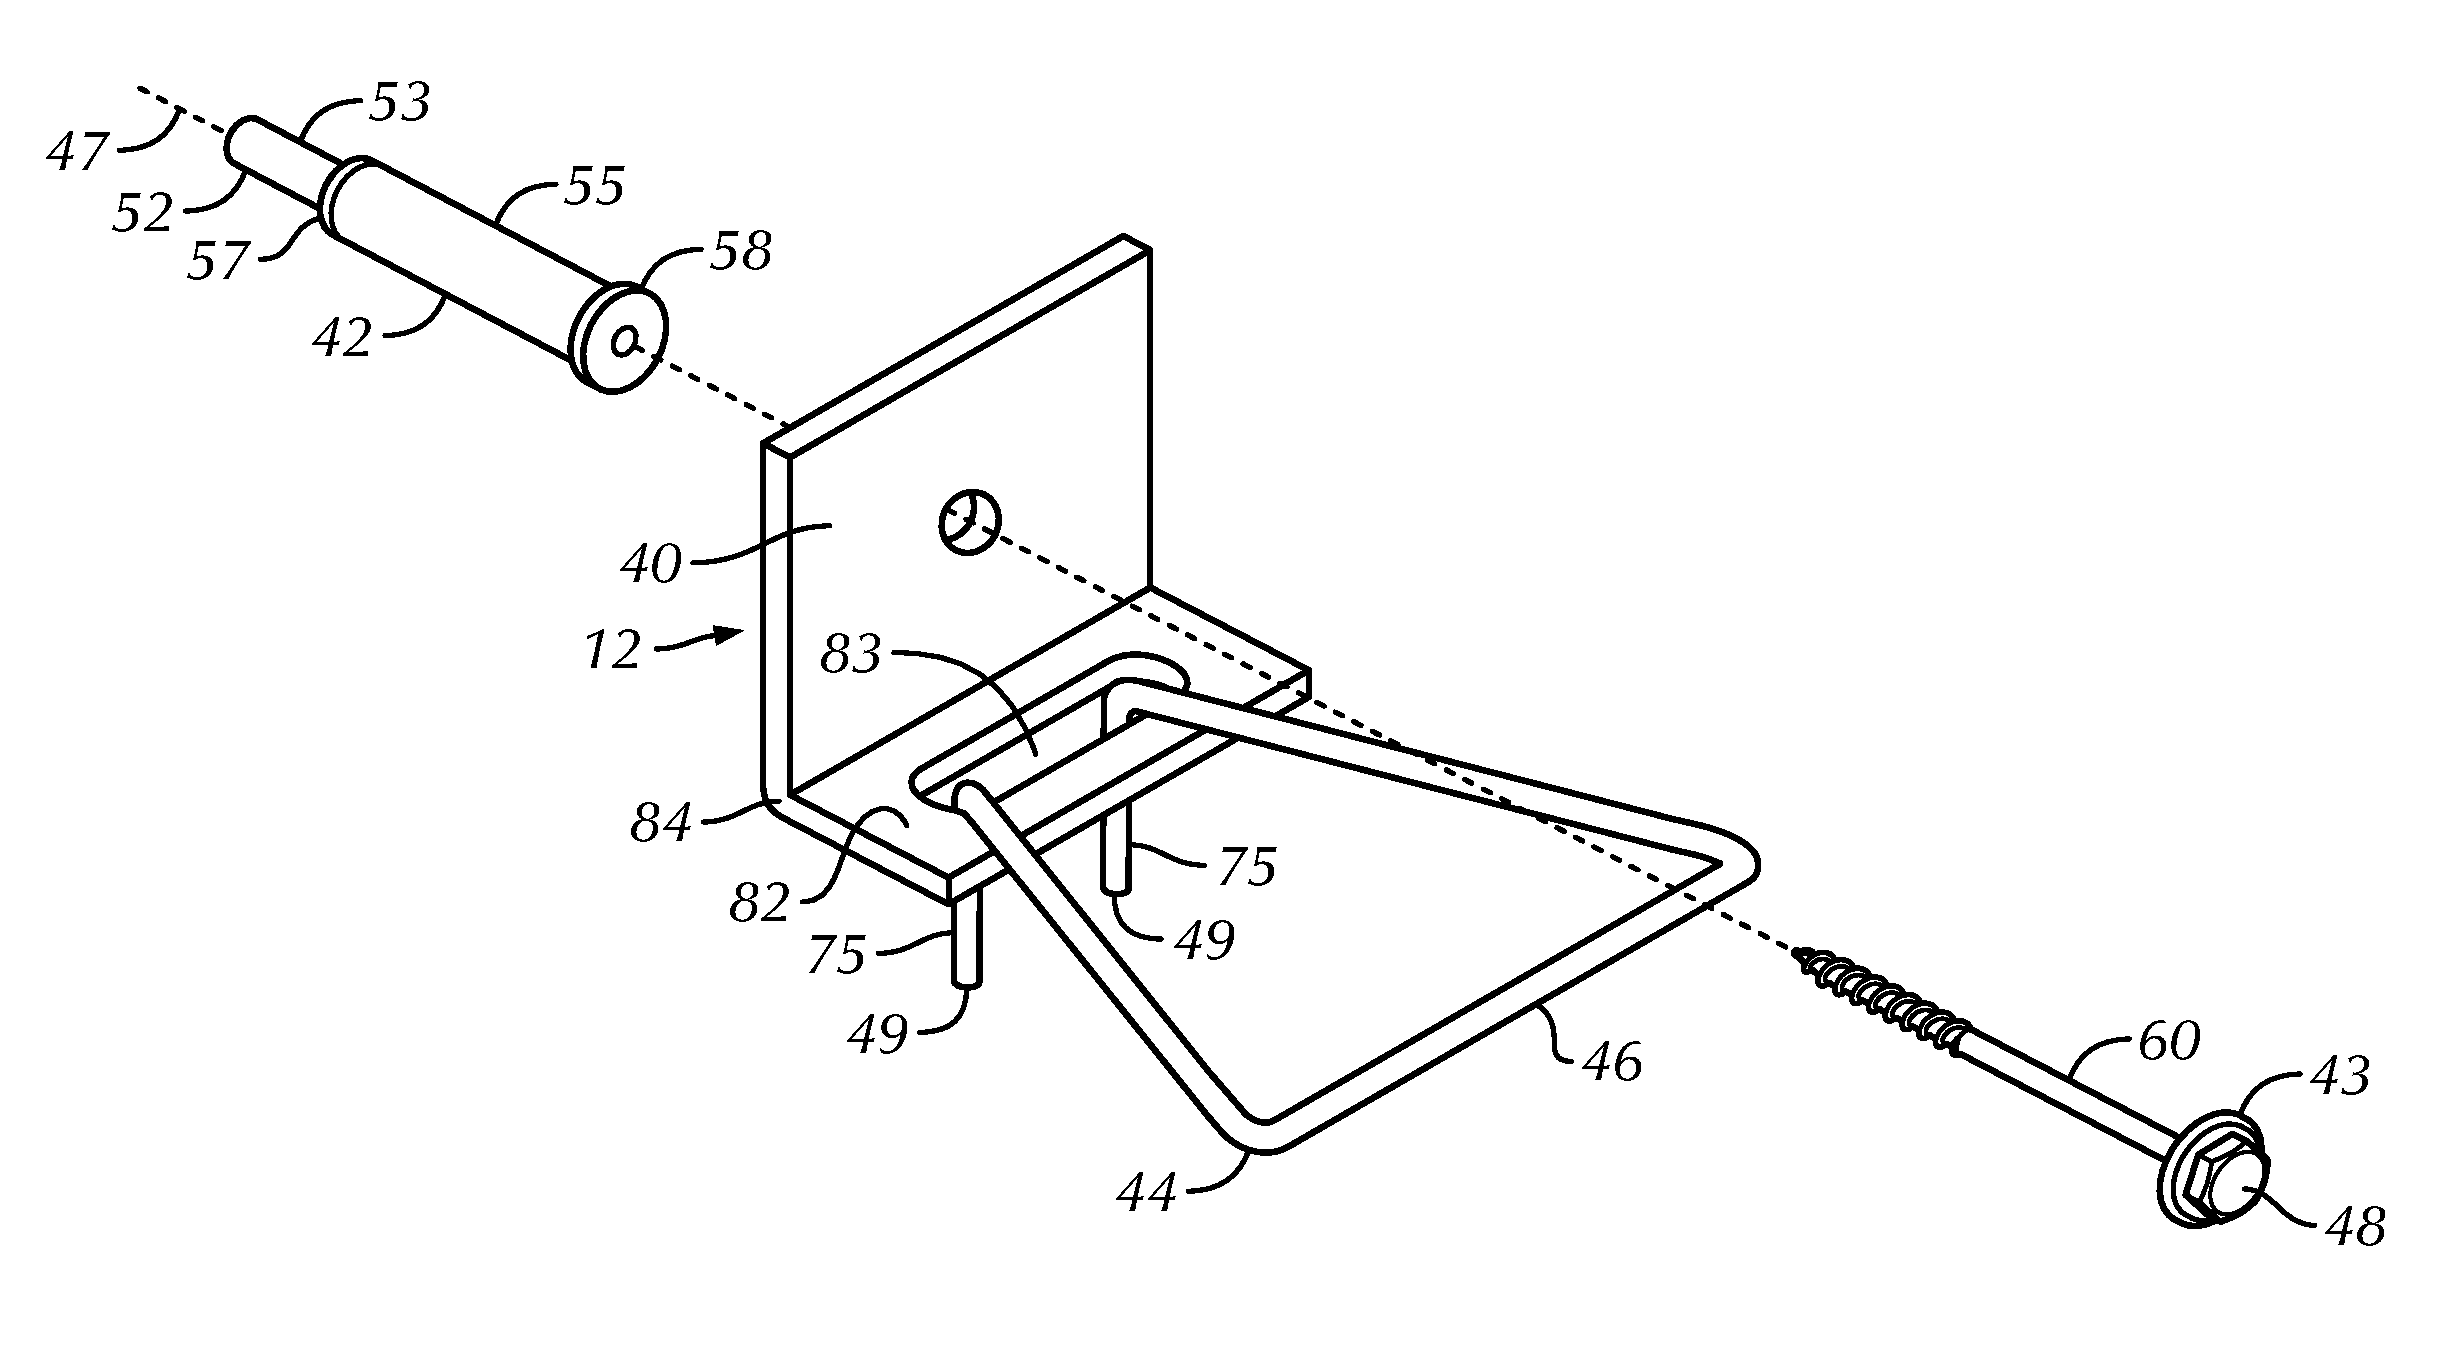 L-shaped sheetmetal anchor with tubular leg and anchoring assembly